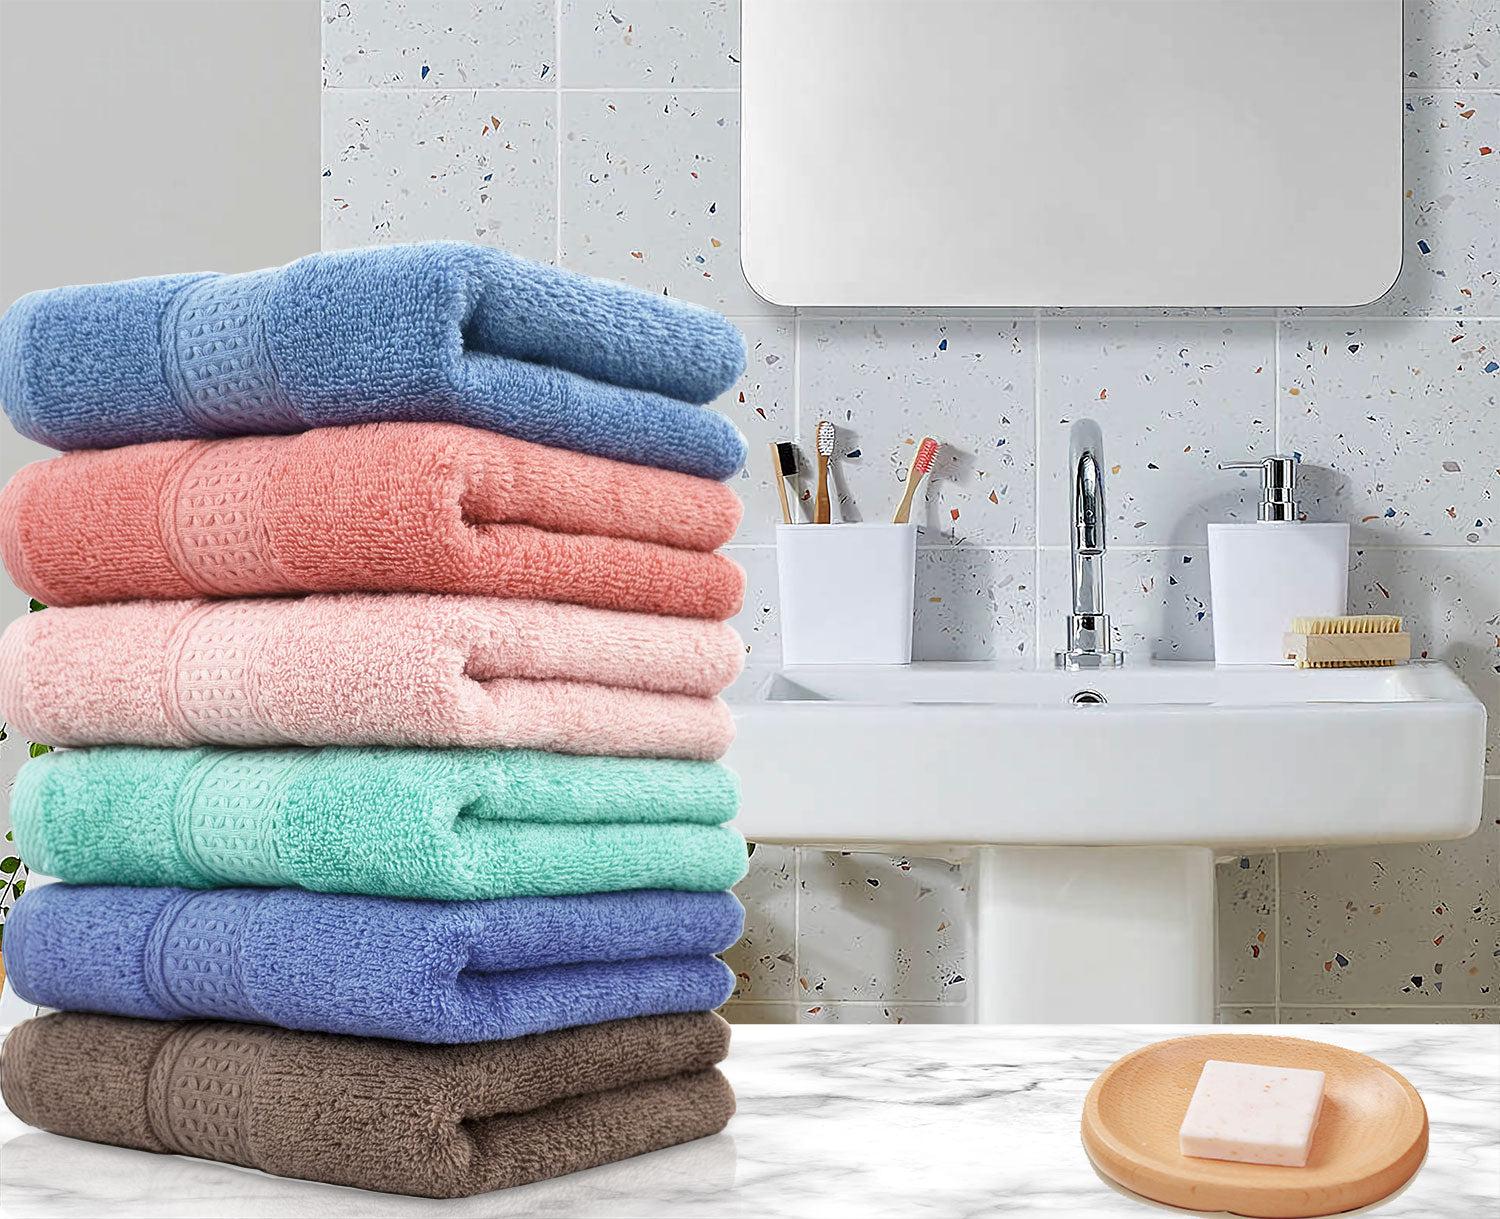  Cleanbear Hand Towel Face Towel Set,100% Cotton, Assorted  Colors Hand Towels, Size 29 x 13, 6-Pack 6 Colors : Home & Kitchen